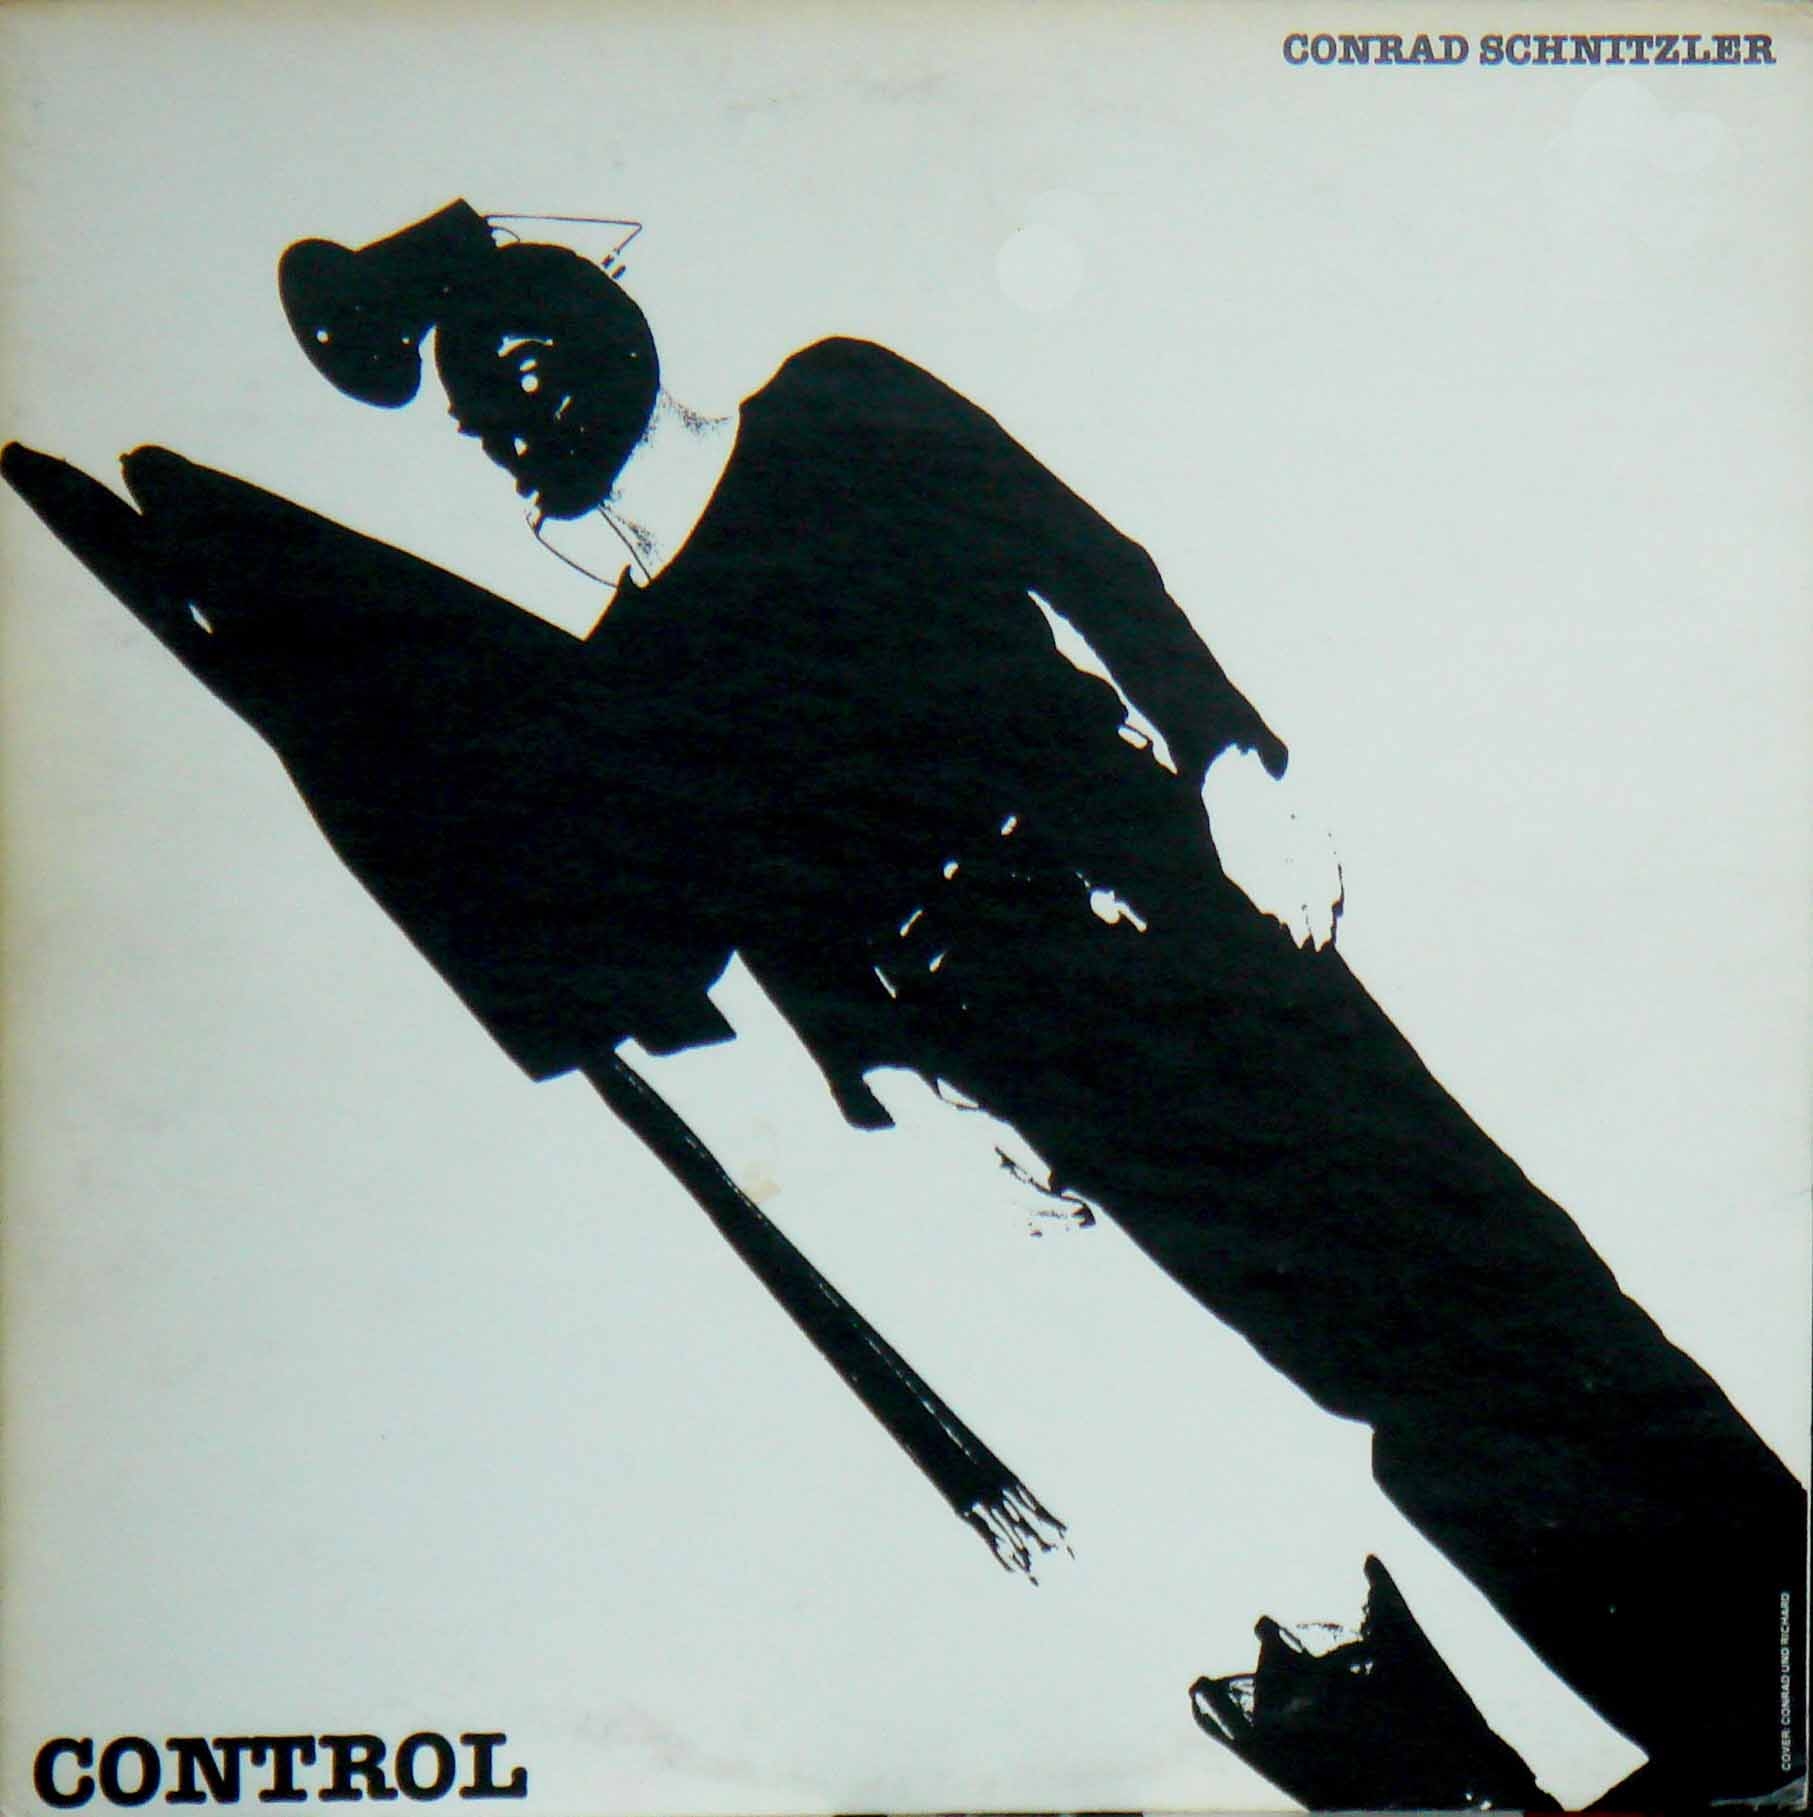 Carl Schnitzler - "Control"